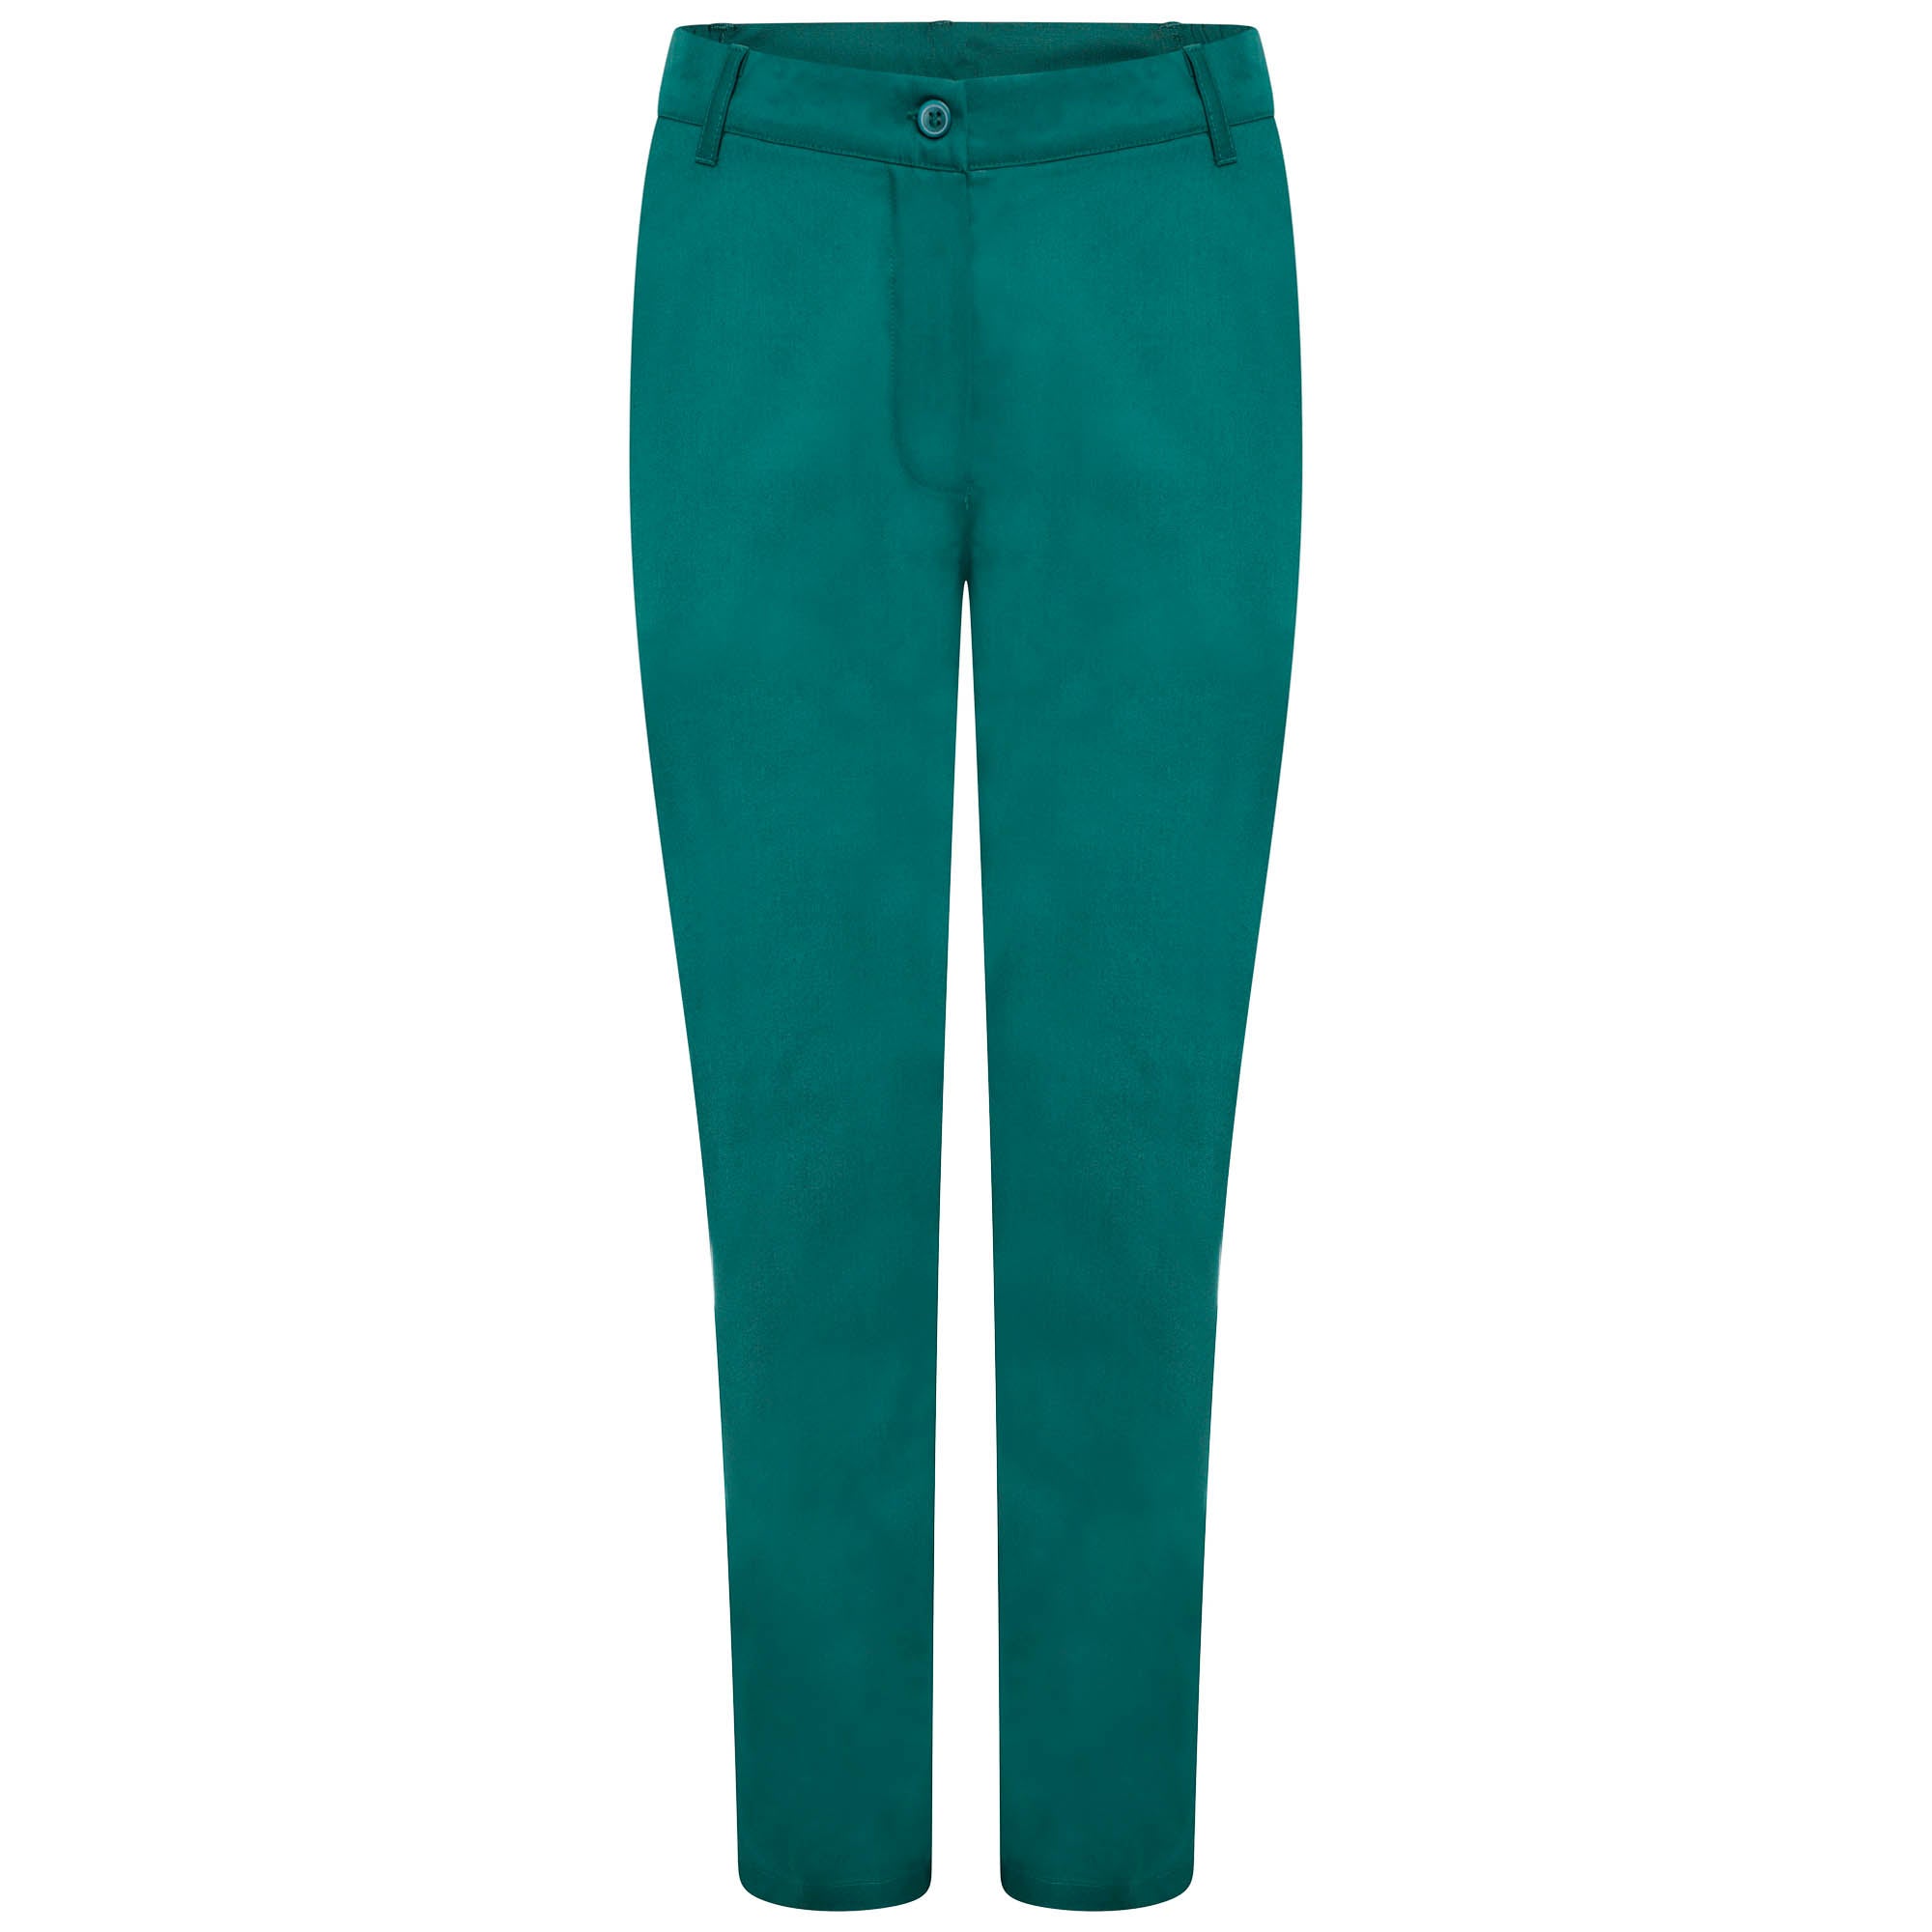 Ladies green trousers | Ladies green trousers in high quality